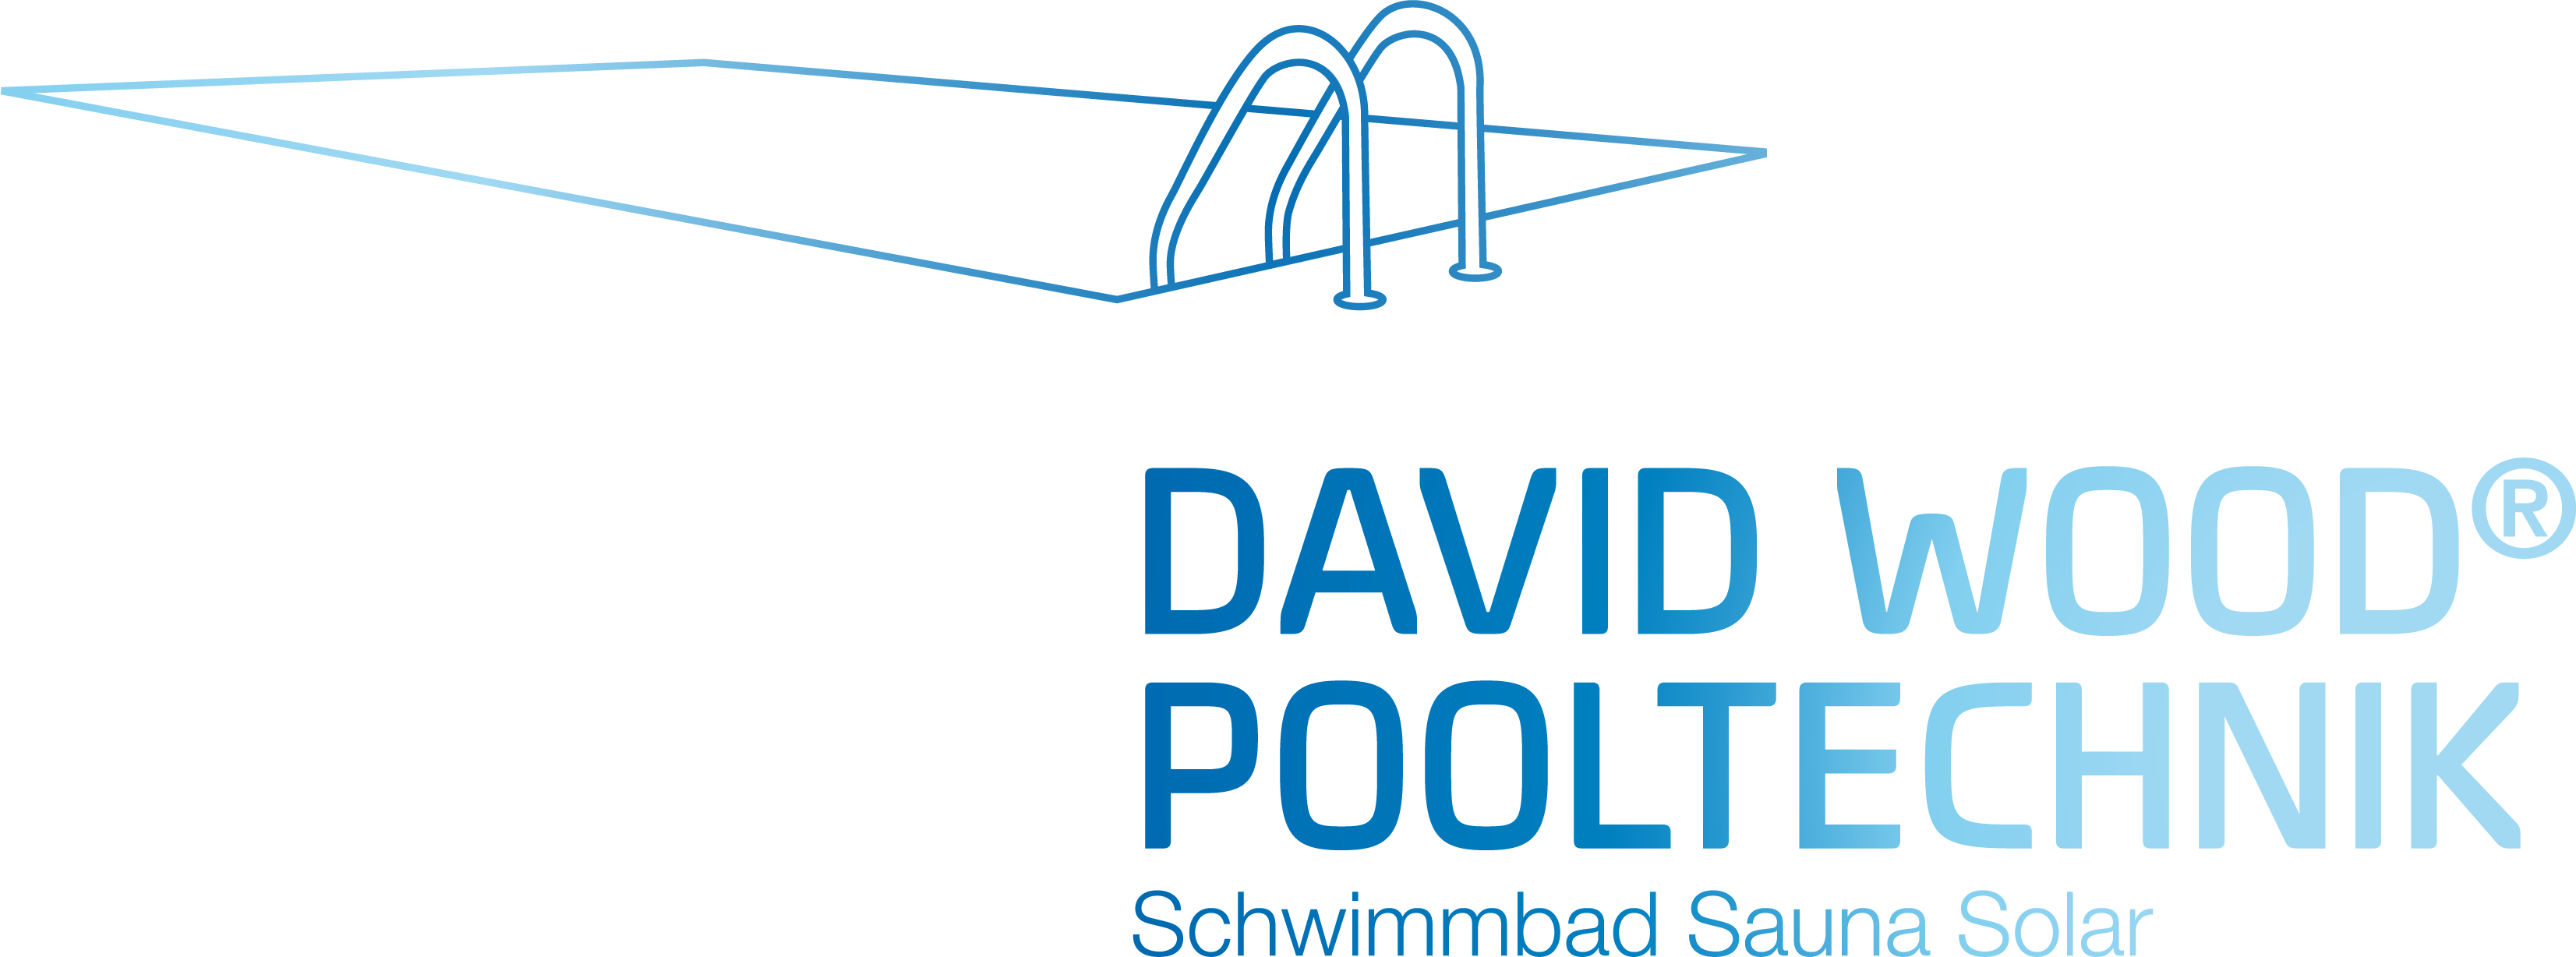 David Wood Pooltechnik Logo Brand